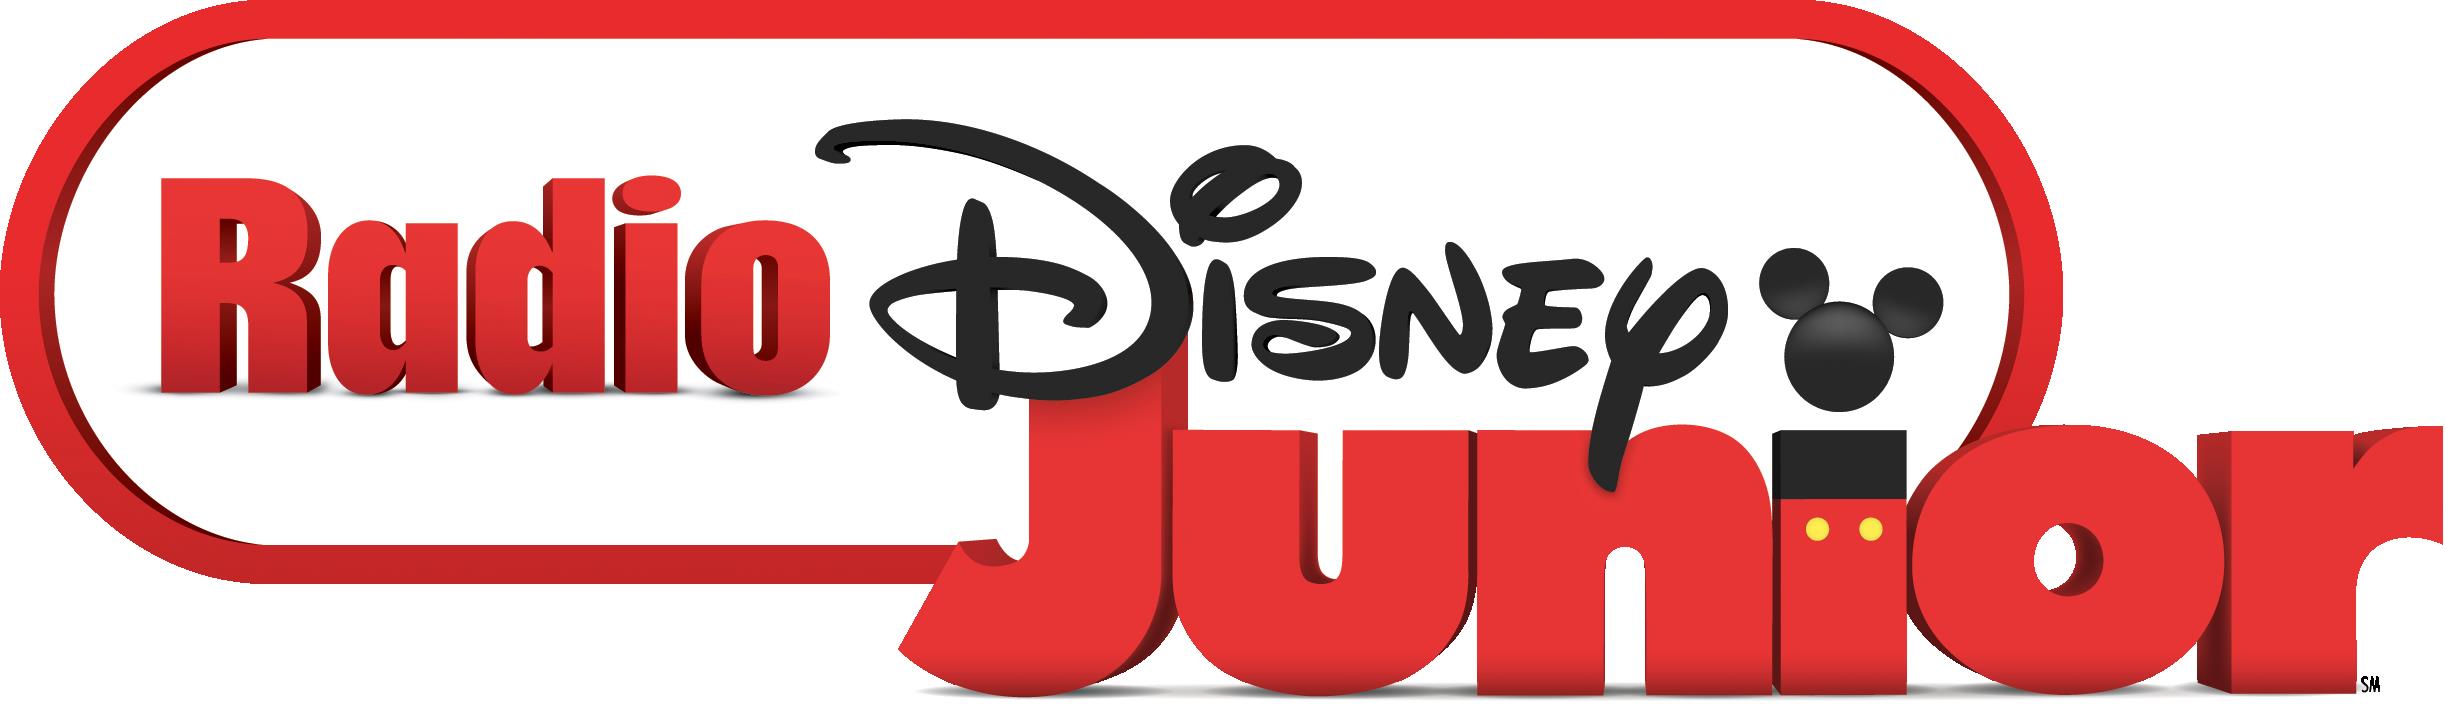 Radio Disney Junior added to IHeartRadio!